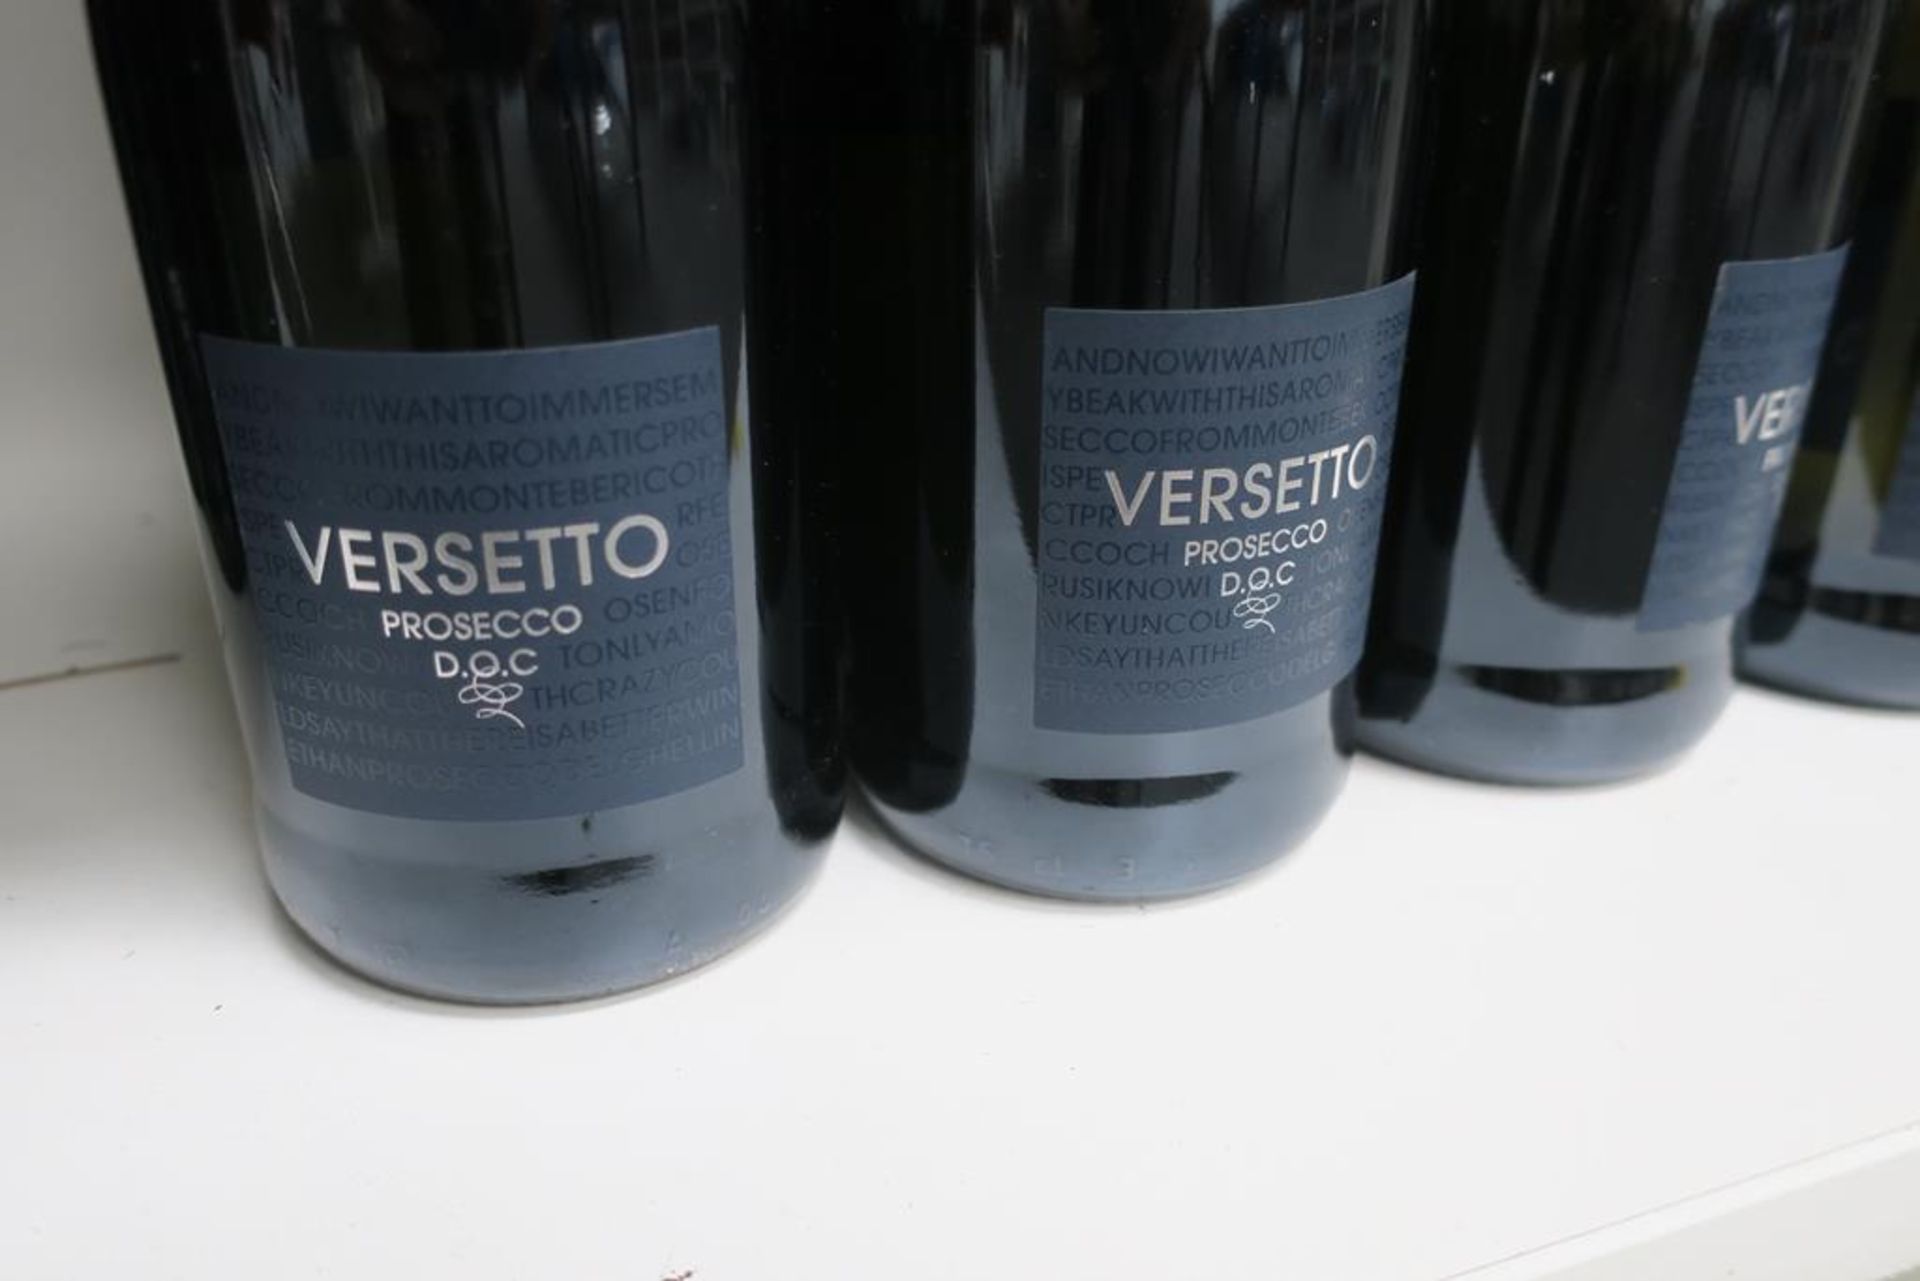 Twelve Bottles of Versetto Prosecco Extra Dry